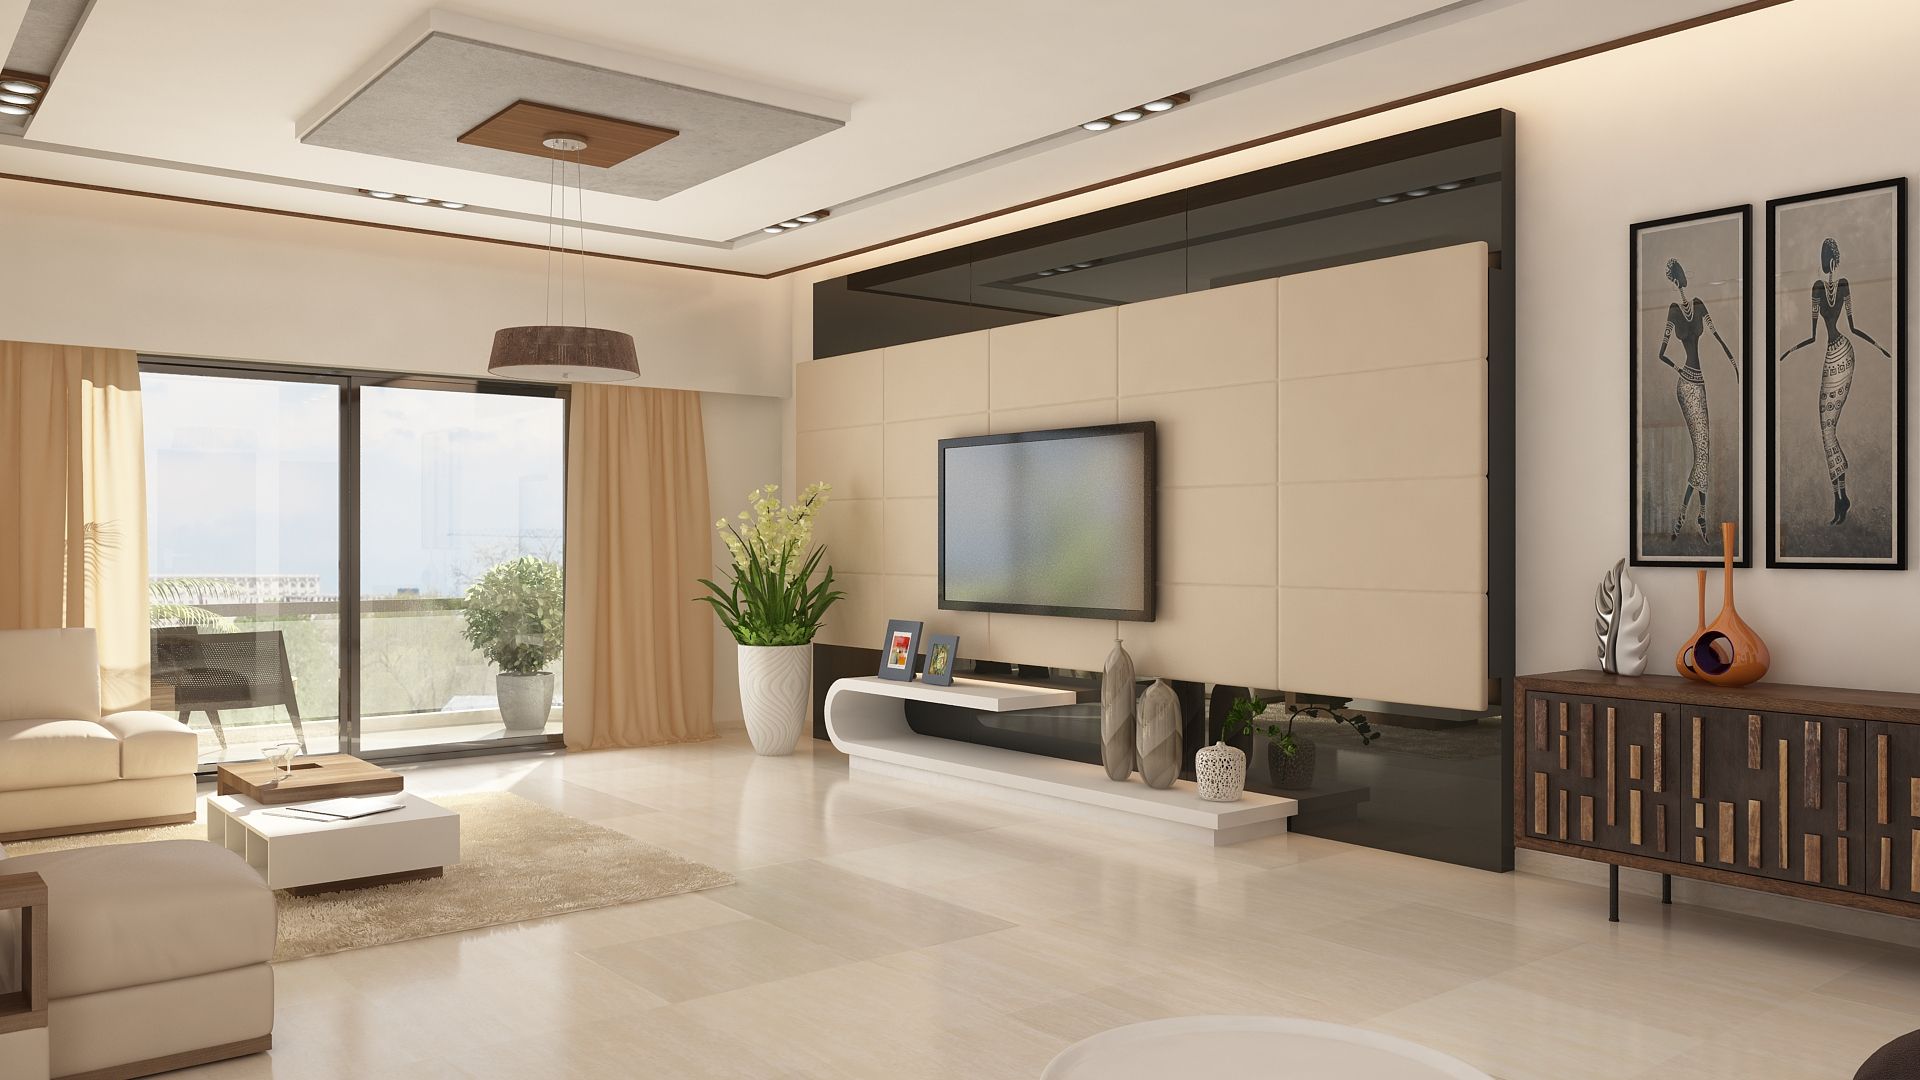 2 BHK Apartment Interior Design, Ghar360 Ghar360